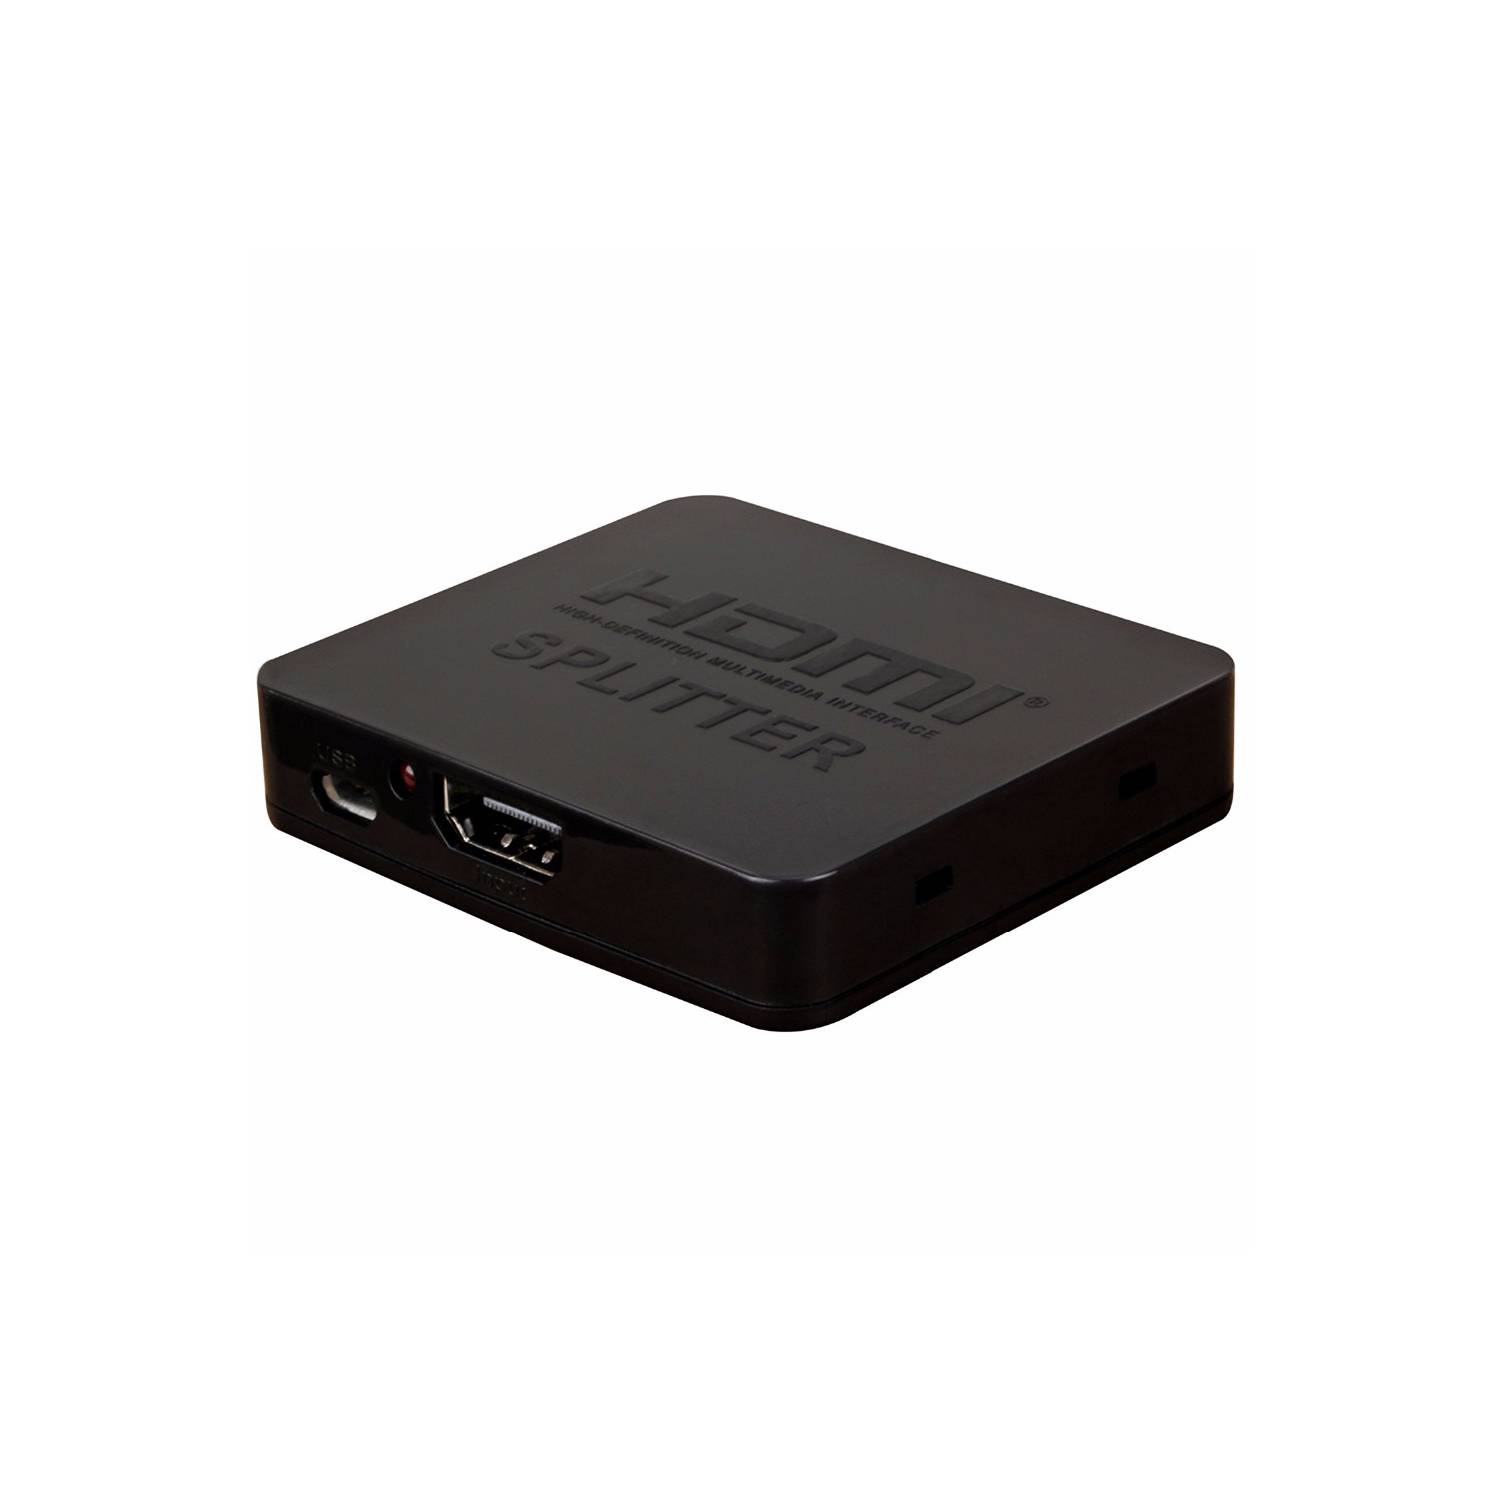 Compra Splitter Edision Divisor HDMI 4K 1x2 con precios increibles.